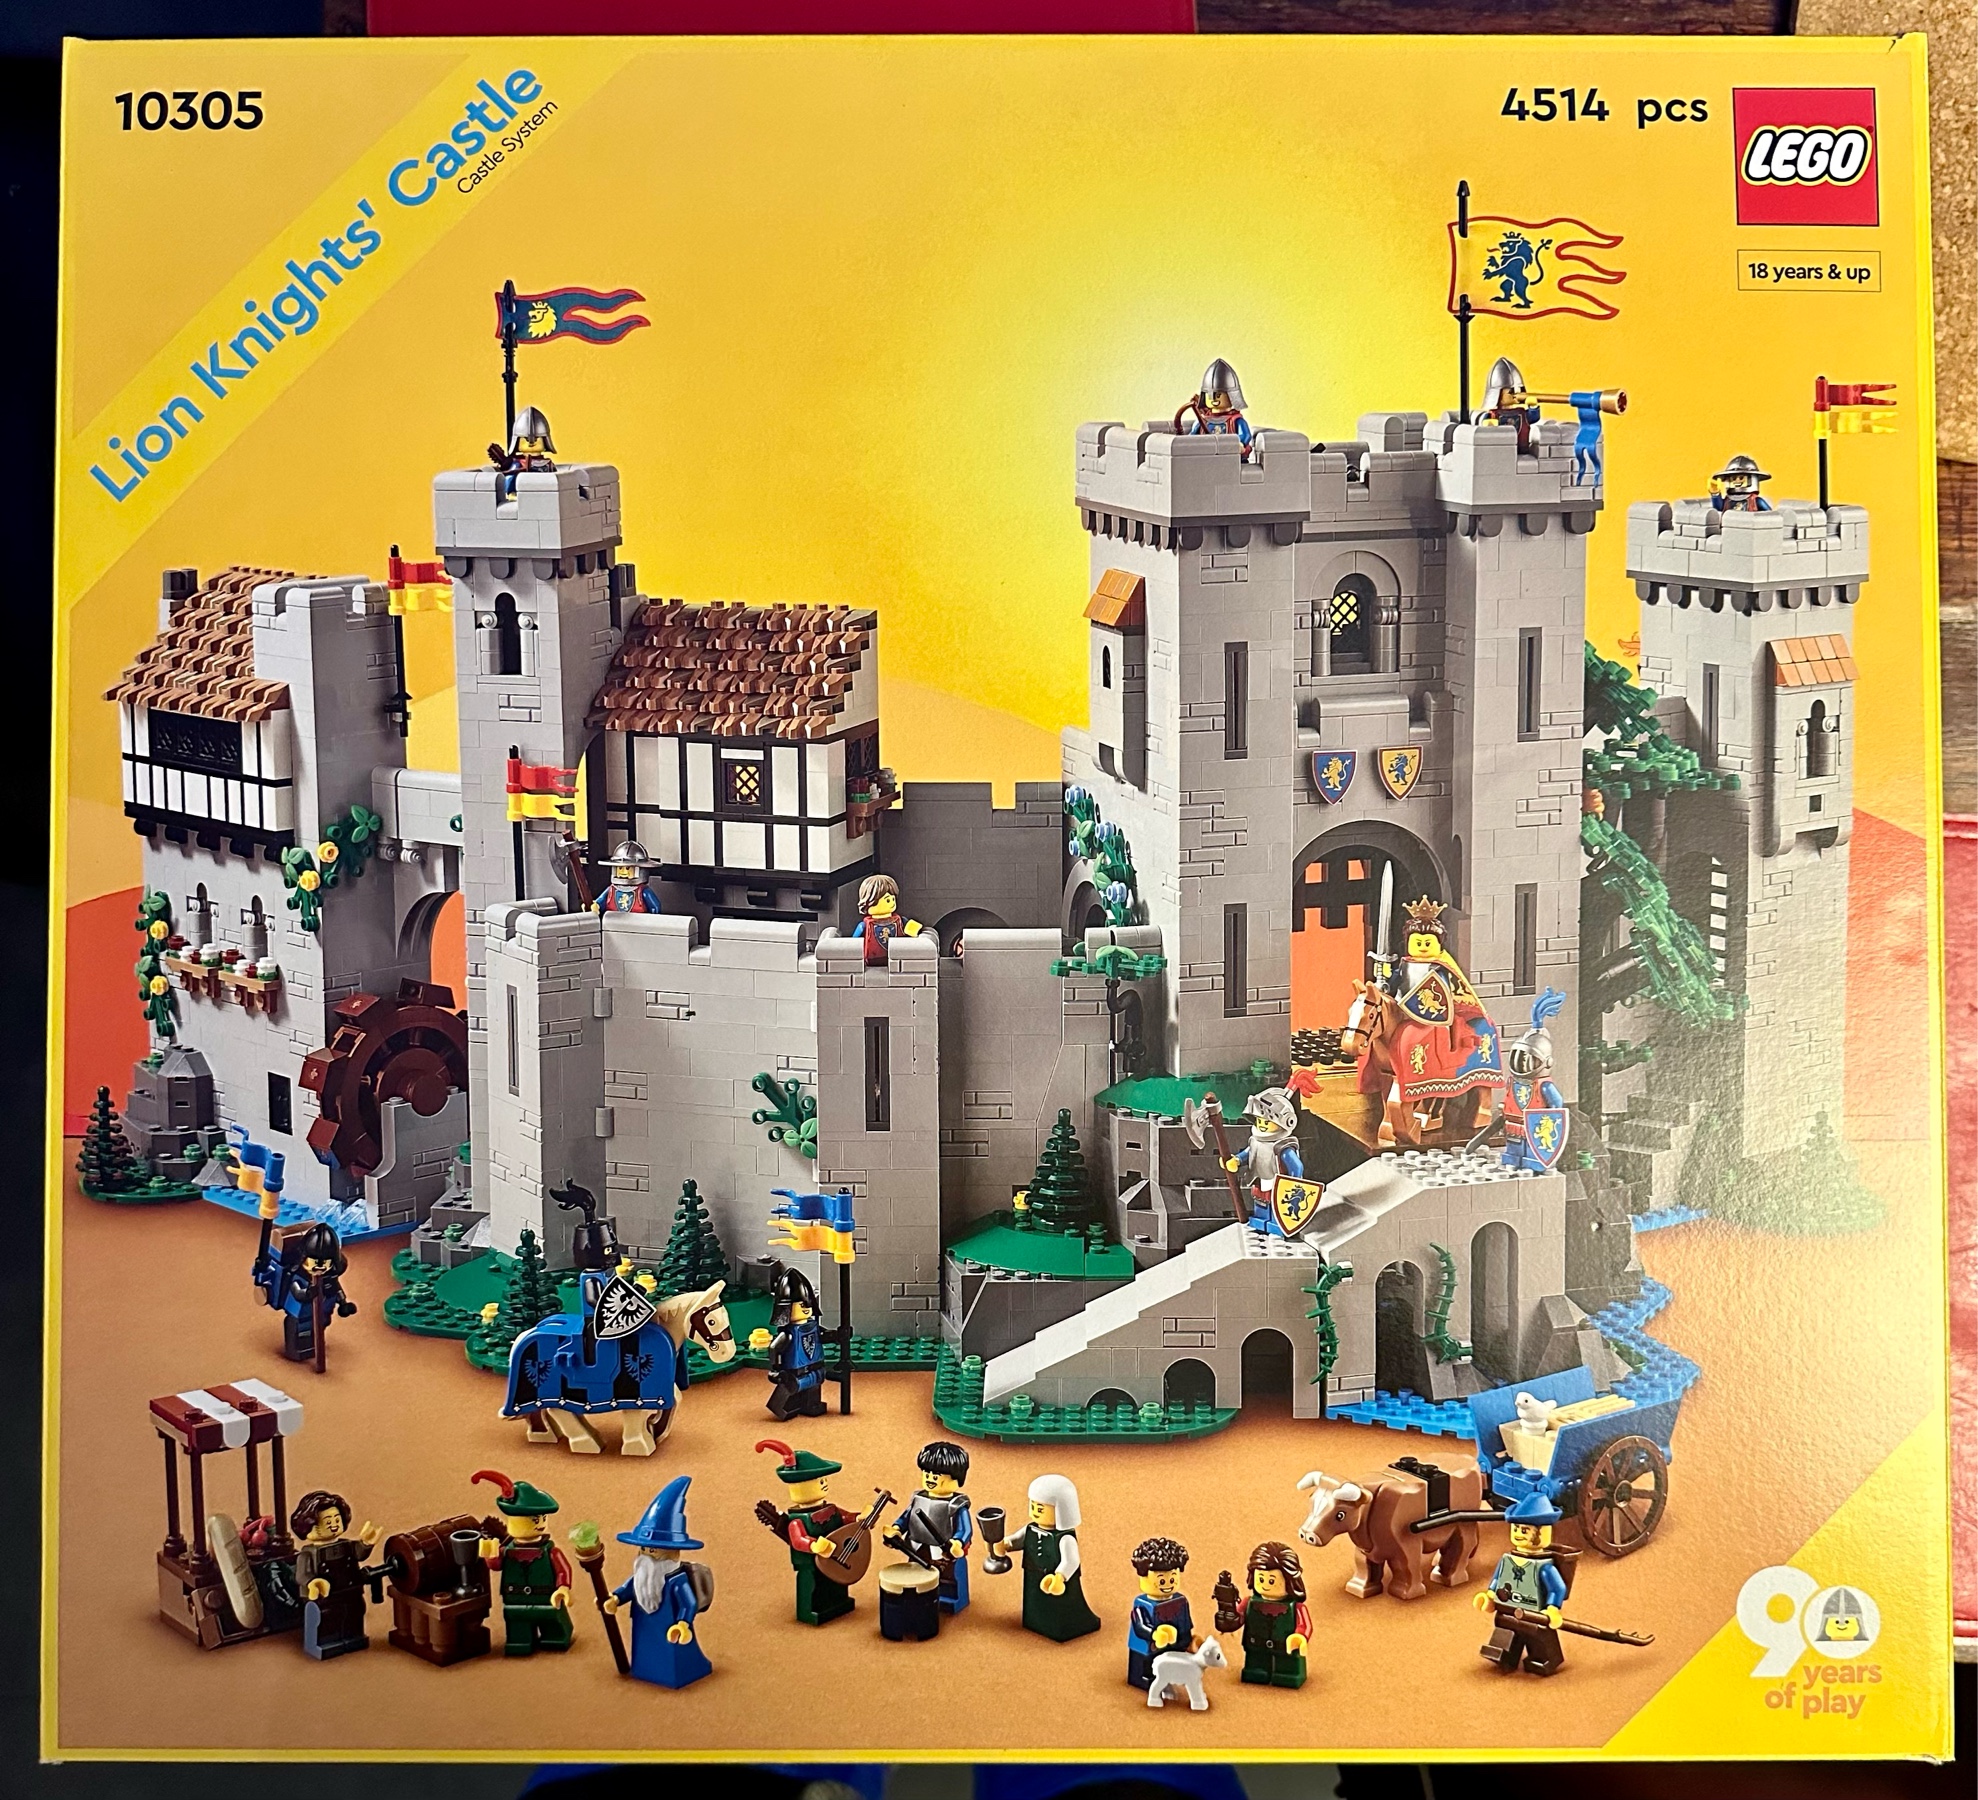 Box of LEGO Castle Set 10305: Lion Knight's Castle with 4,514 pieces